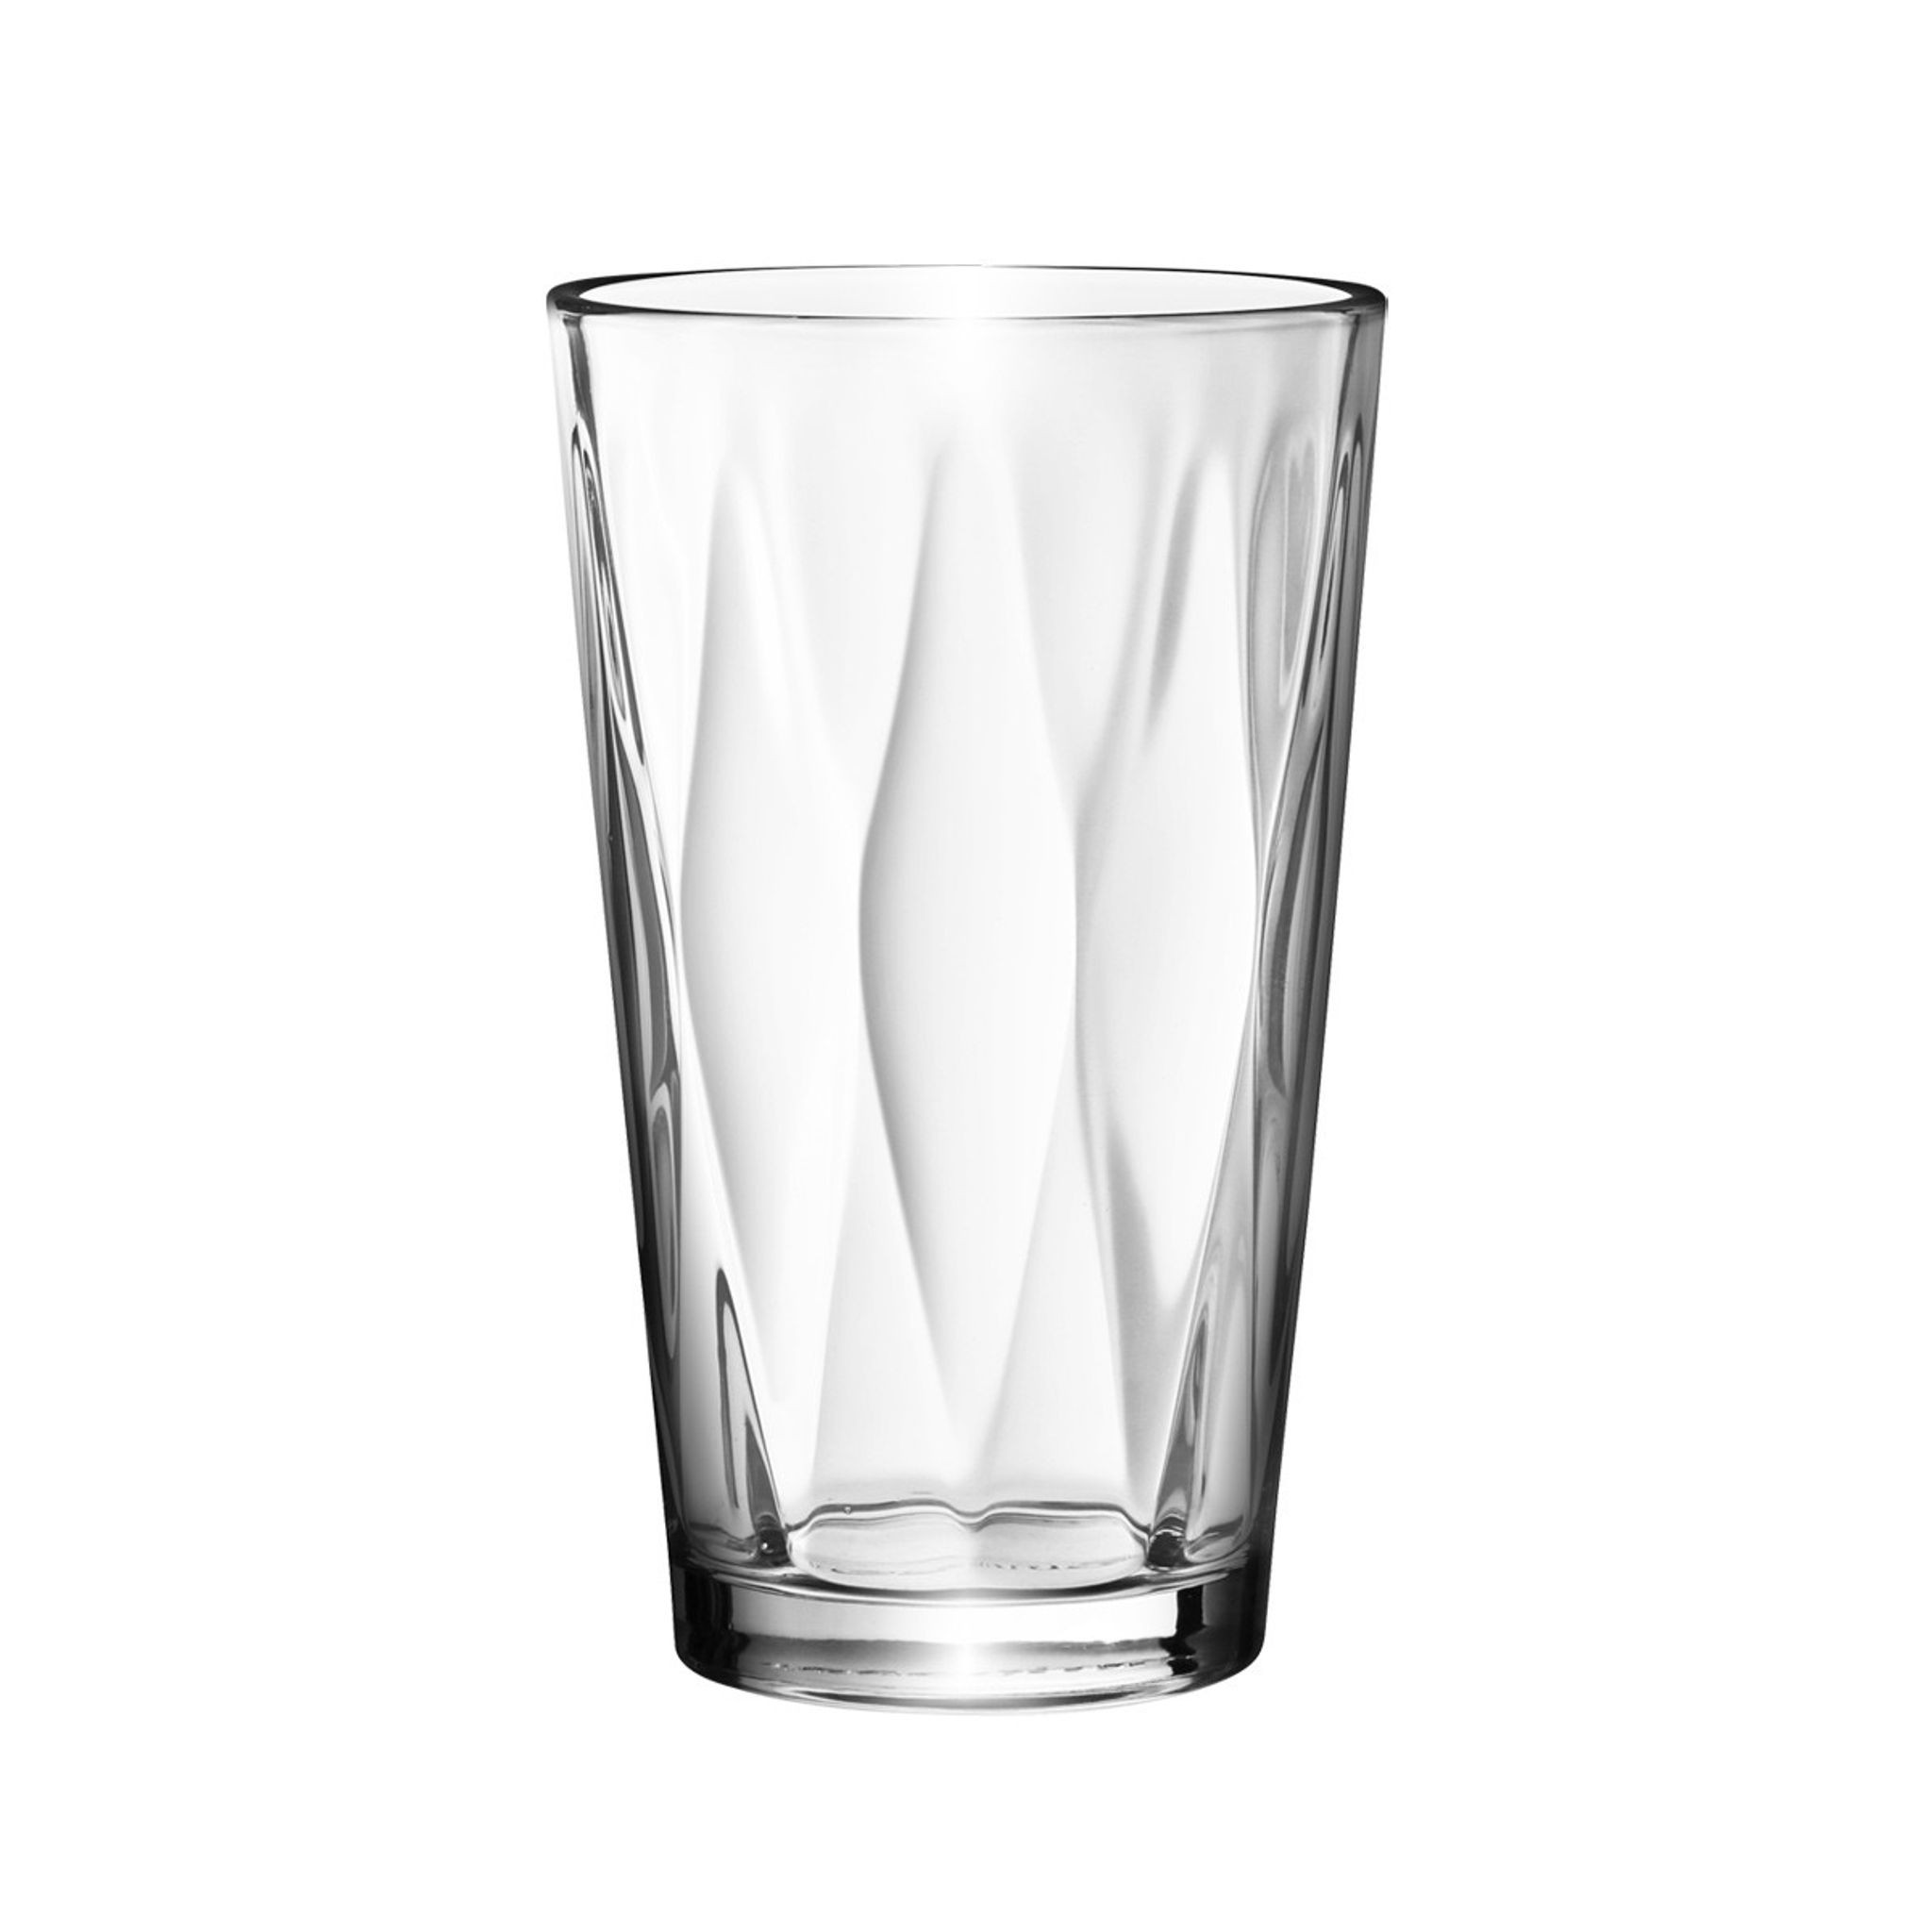 Glass myDRINK Optic 350 ml